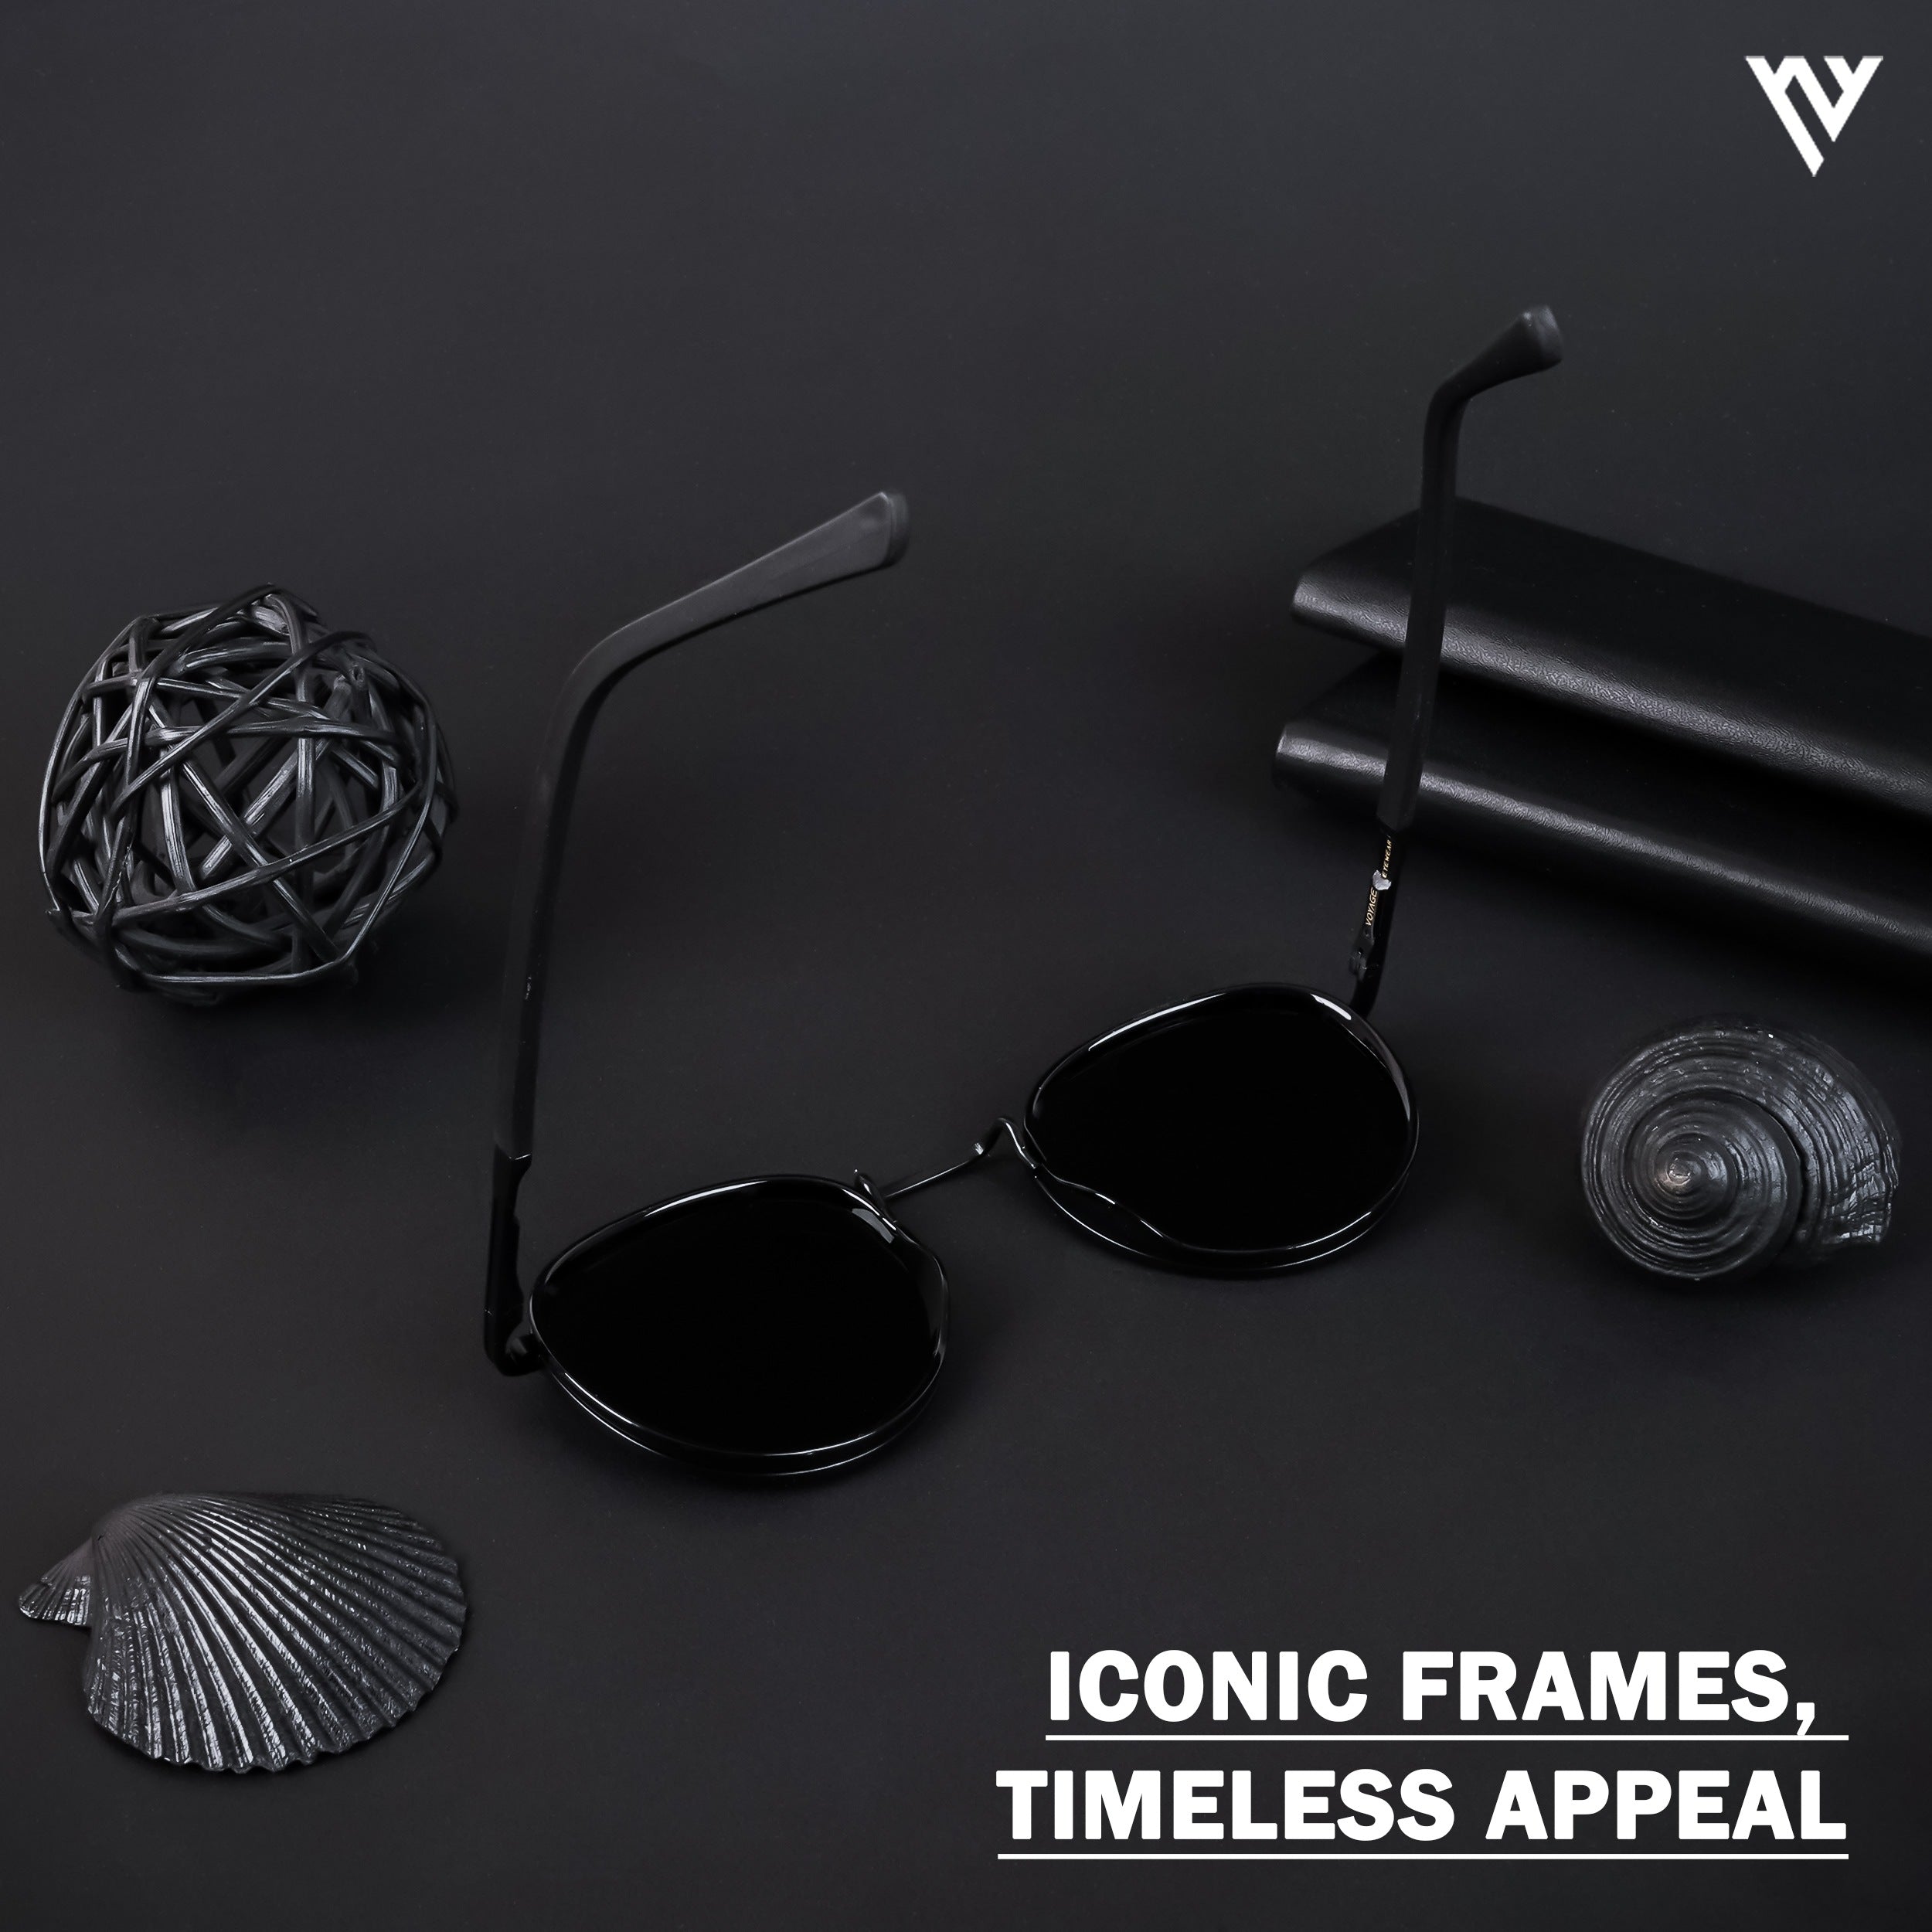 Voyage Exclusive Black Polarized Round Sunglasses for Men & Women - PMG4443